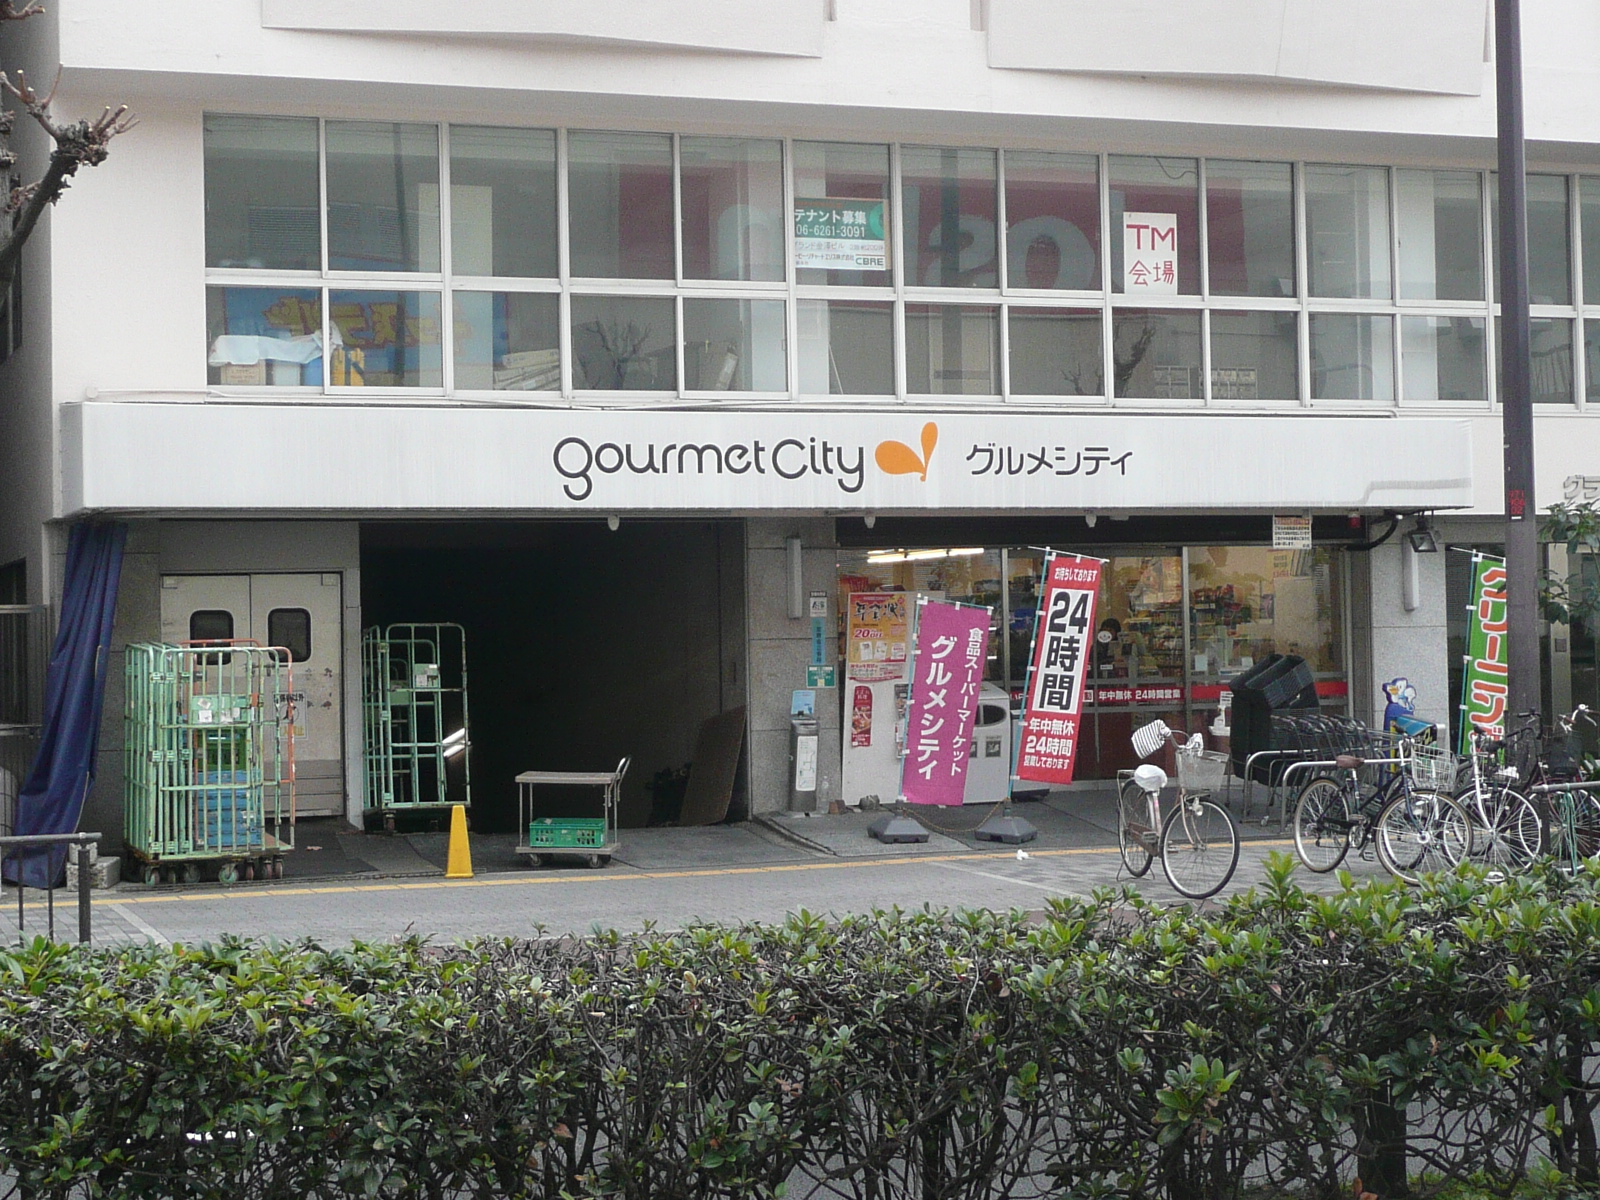 Supermarket. 722m until Gourmet City Shin-Osaka store (Super)